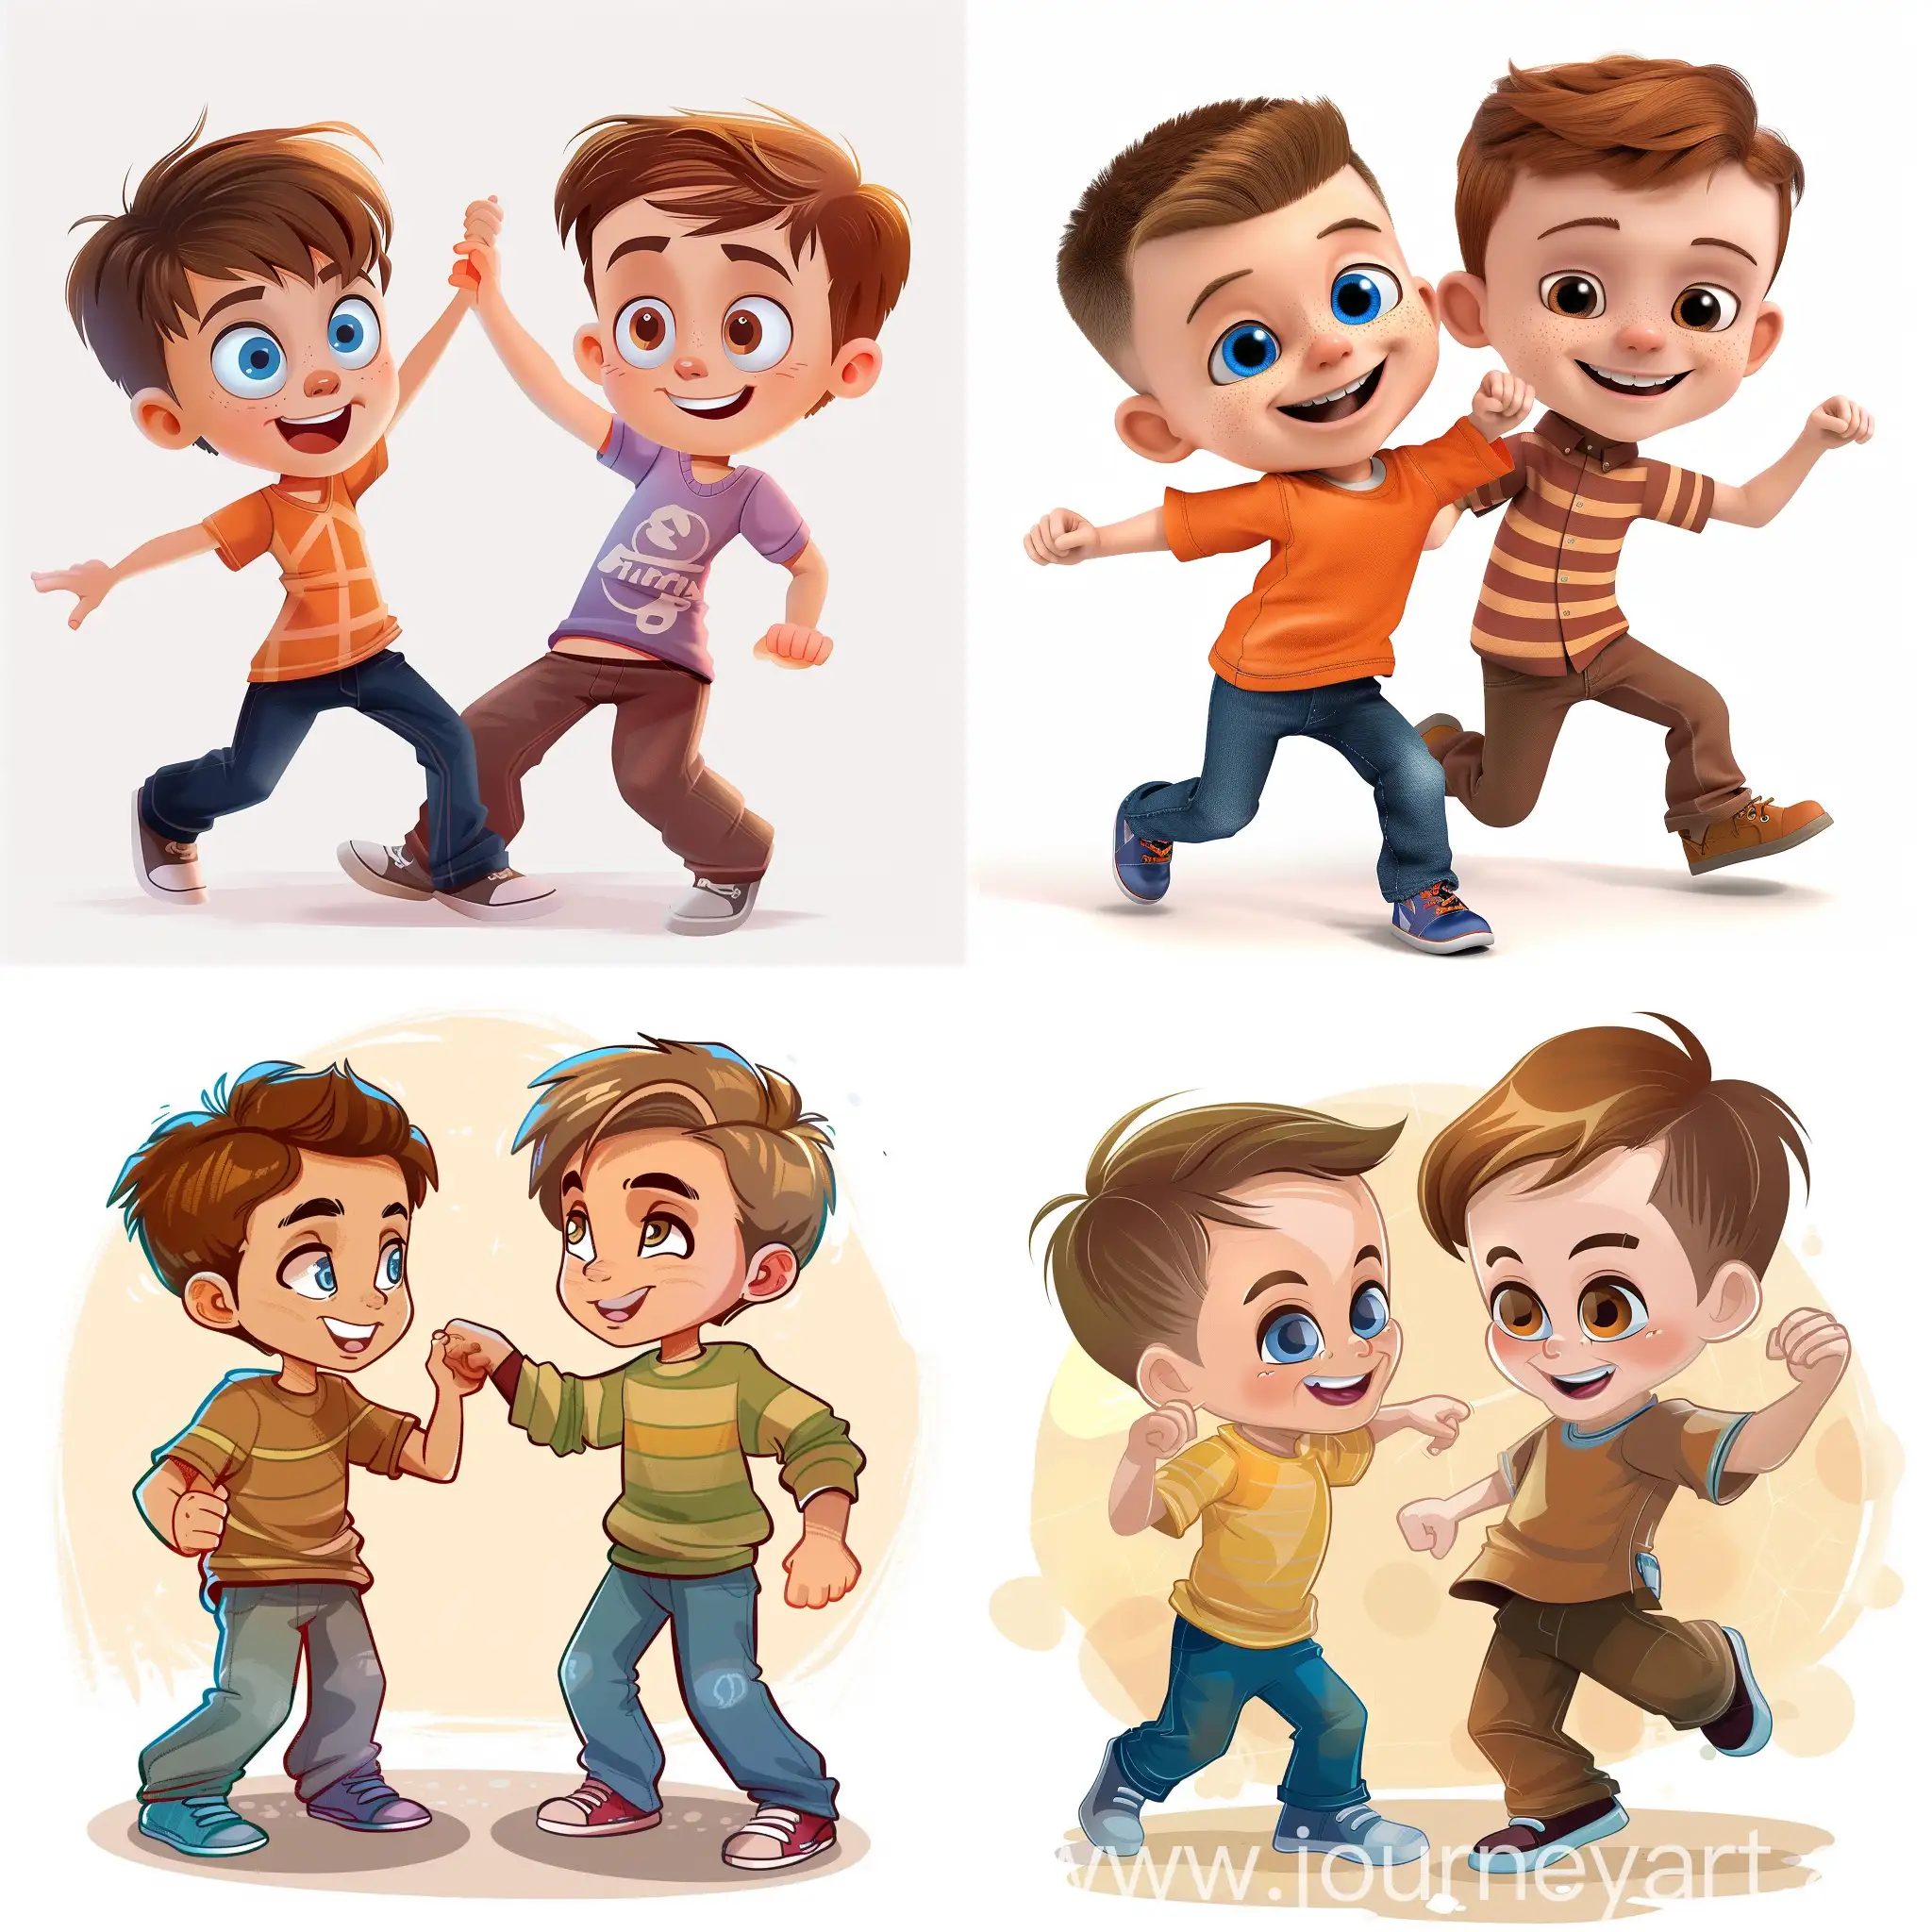 7 year old boy, buzzed brown hair, blue eyes, next to an 10 year old boy, brown buzzed hair, brown eyes, dancing, cartoon